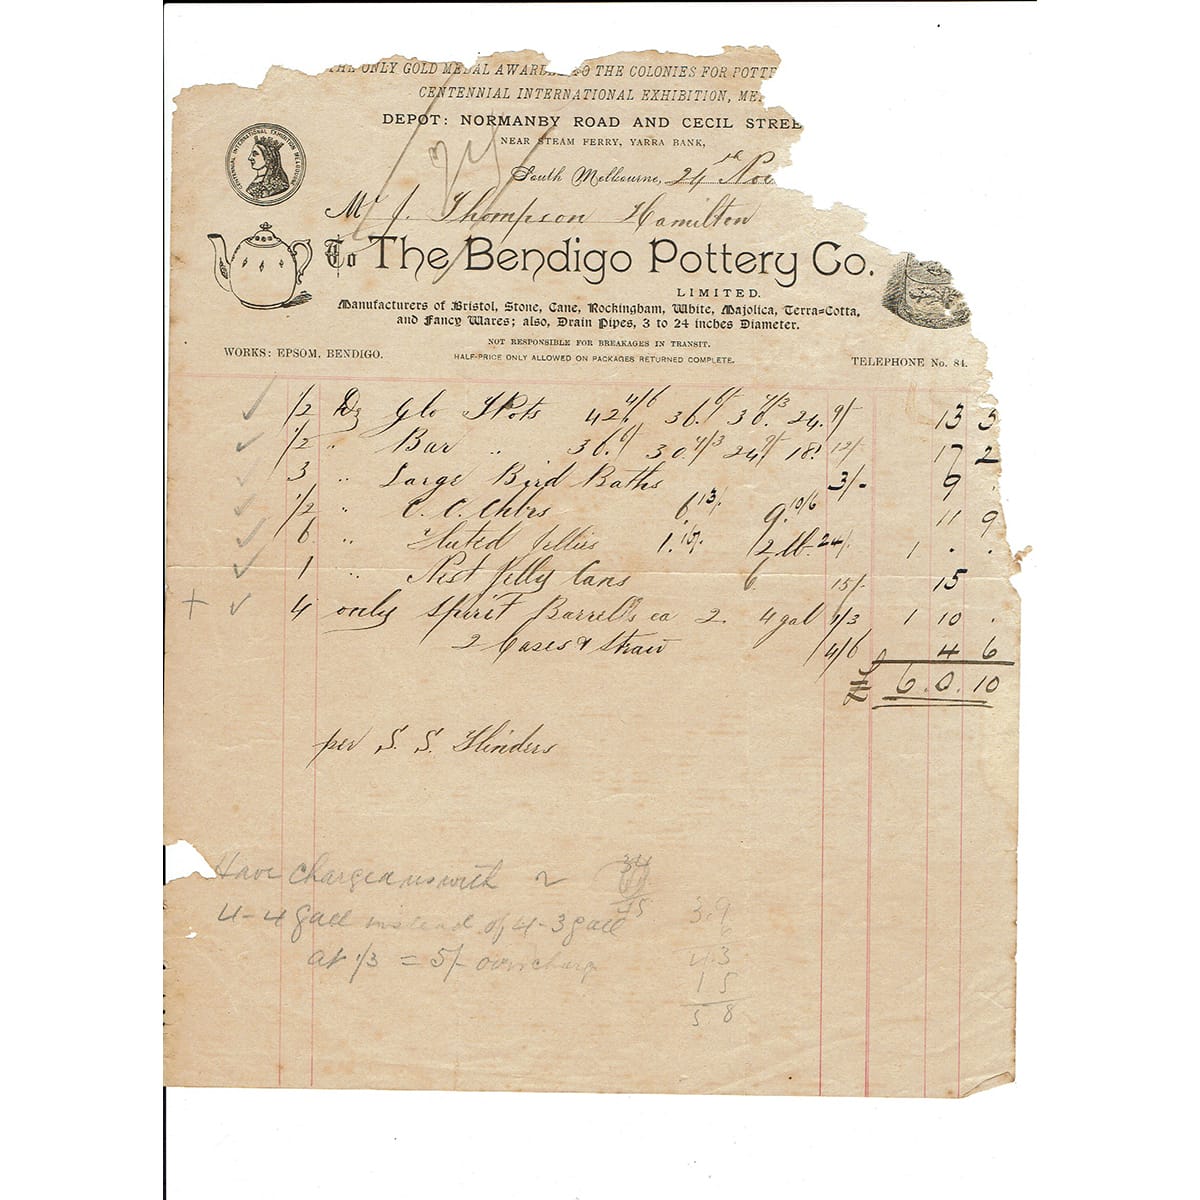 Invoice/Letterhead. The Bendigo Pottery Co. Limited. South Melbourne Depot. 1890s. (Victoria)